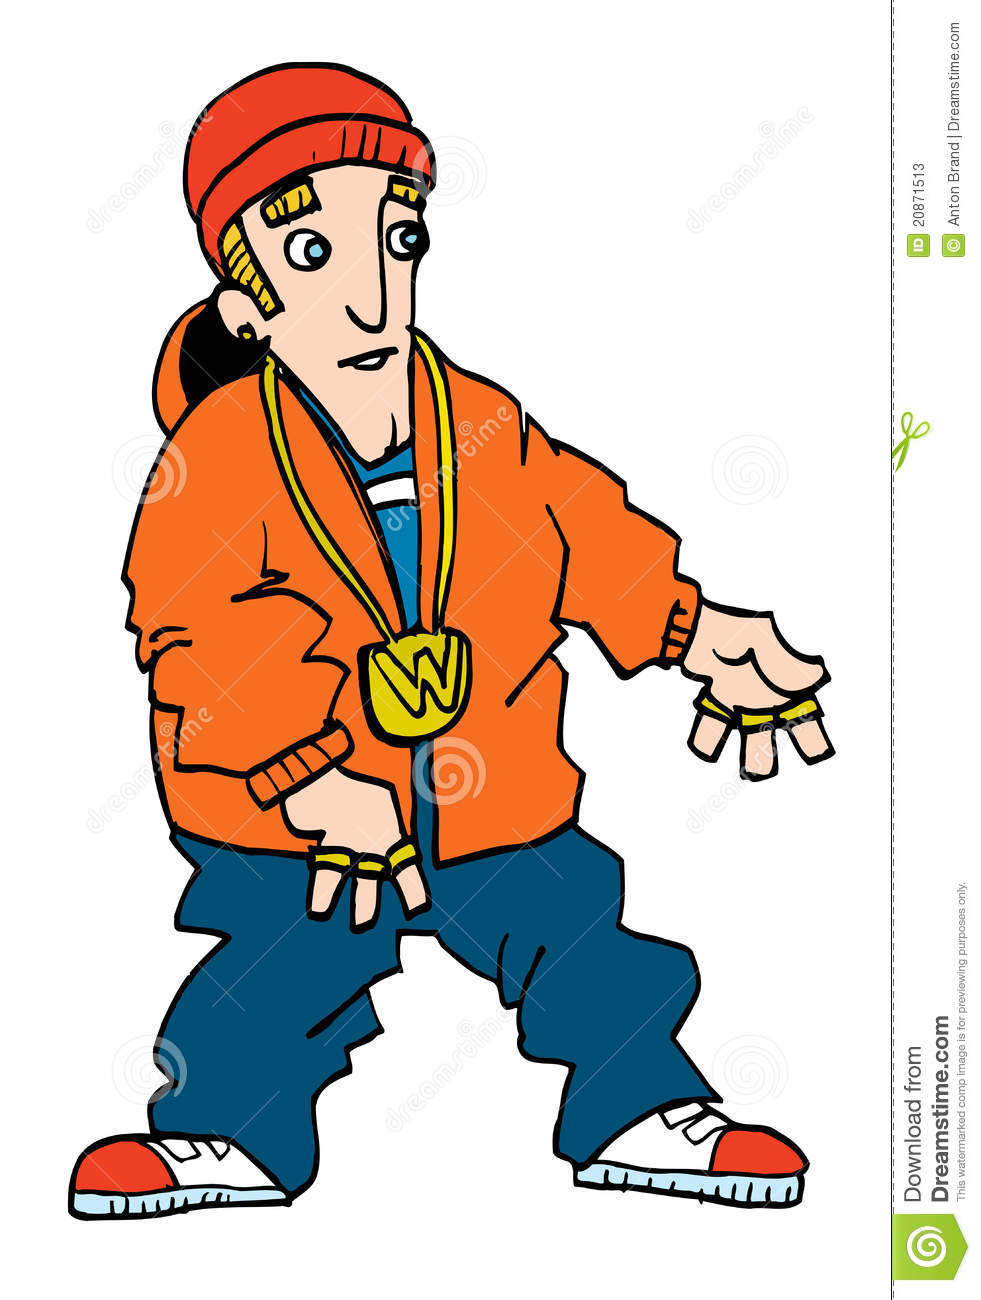 Cartoon Of A Teenage White Rapper Stock Photos   Image  20871513